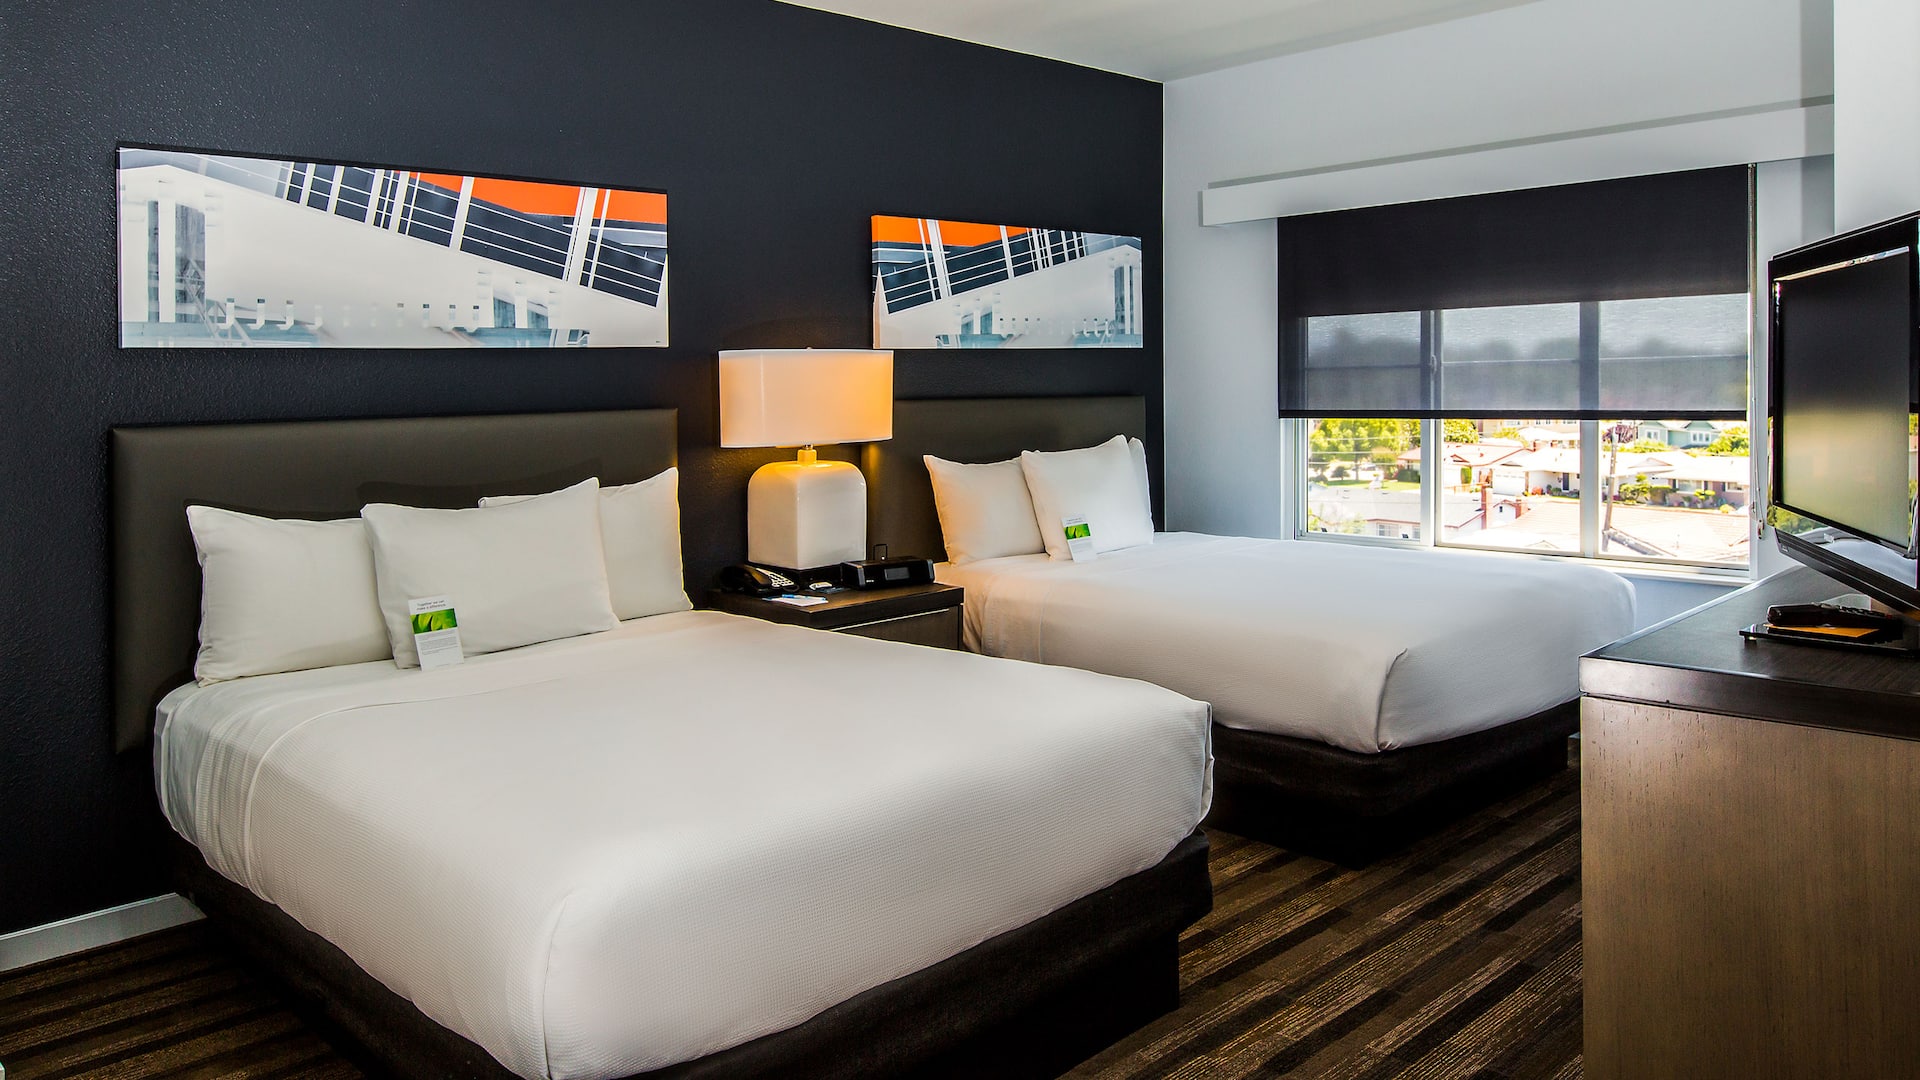 Santa Clara Hotels with Two Queen Beds – Hyatt House Hotel Santa Clara 